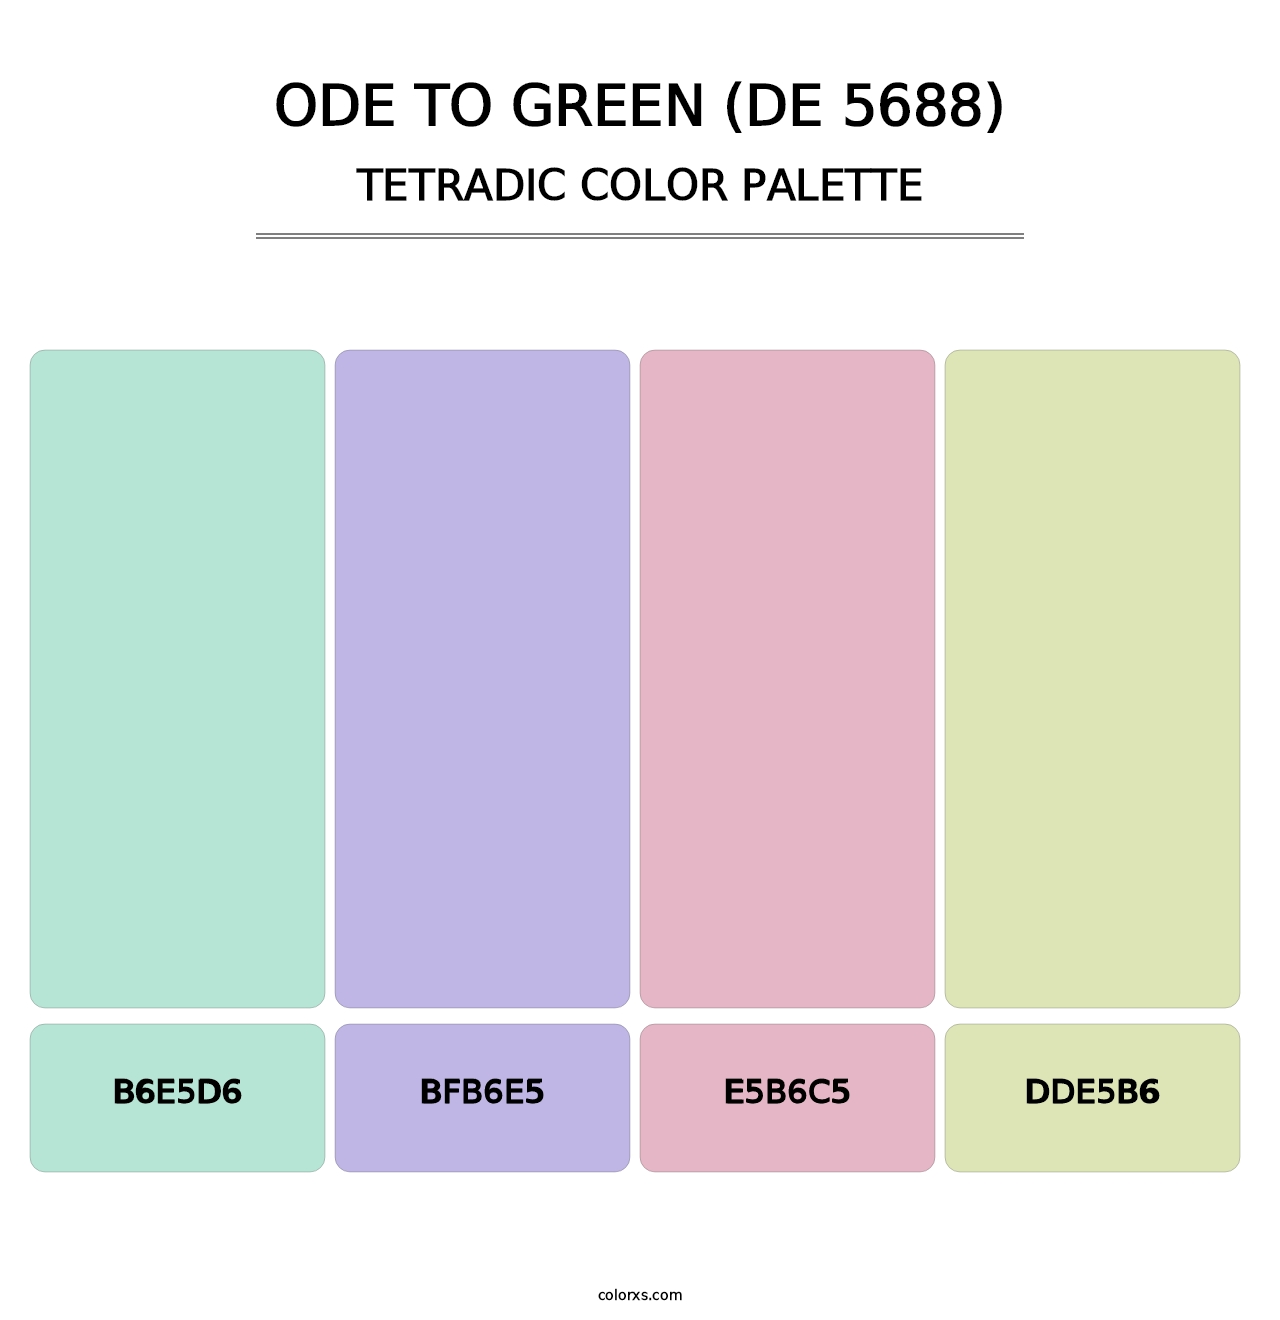 Ode to Green (DE 5688) - Tetradic Color Palette